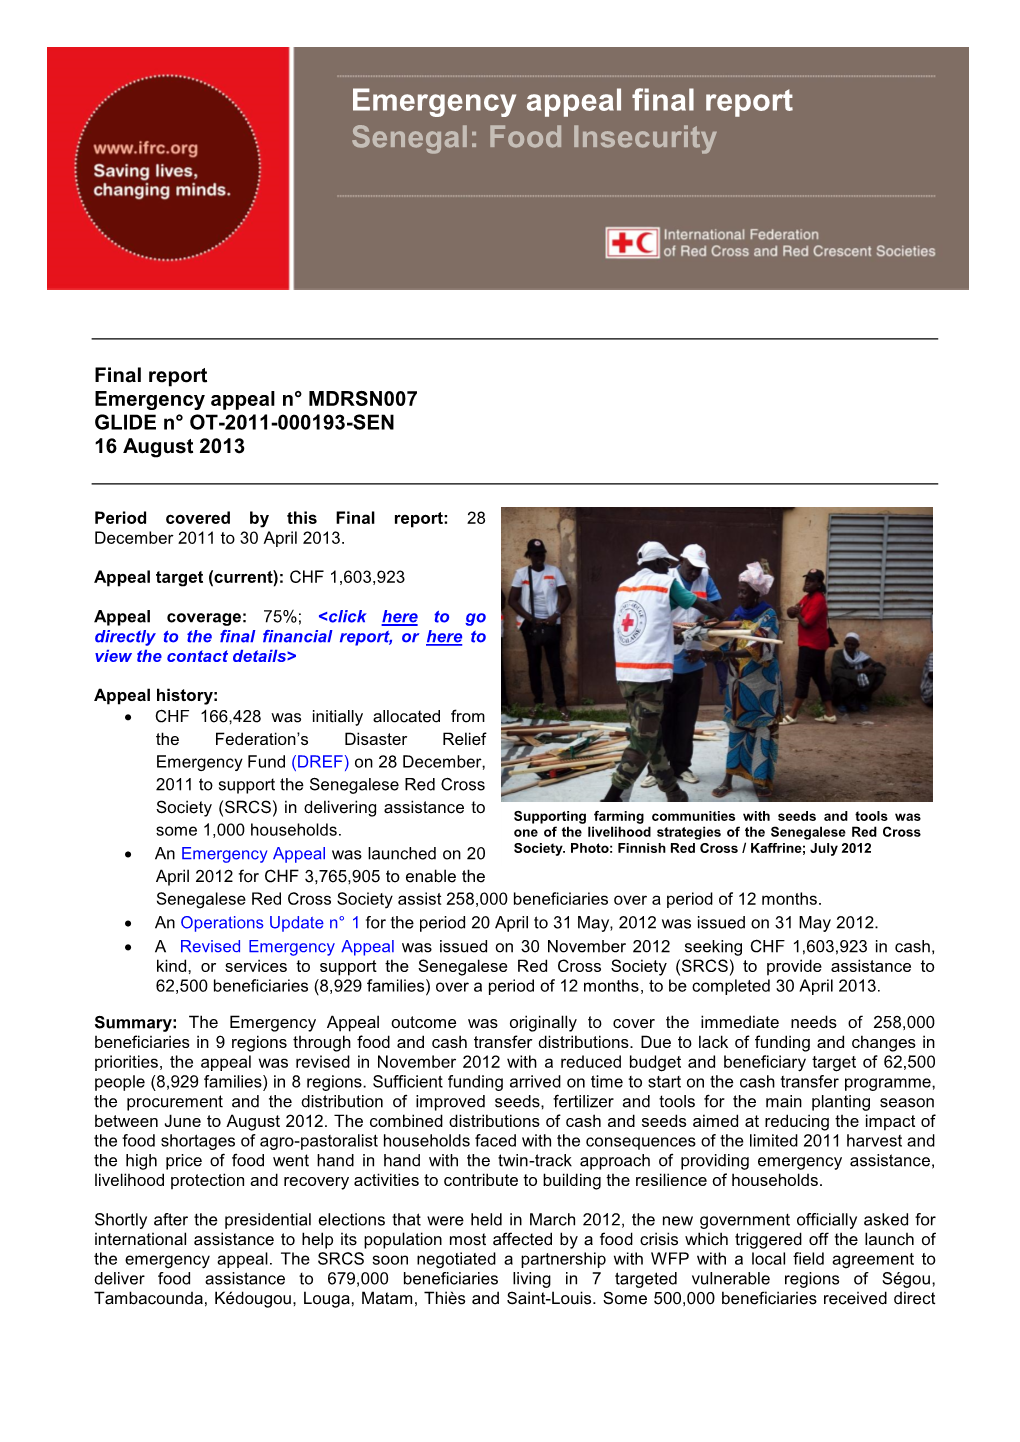 Emergency Appeal Final Report Senegal: Food Insecurity